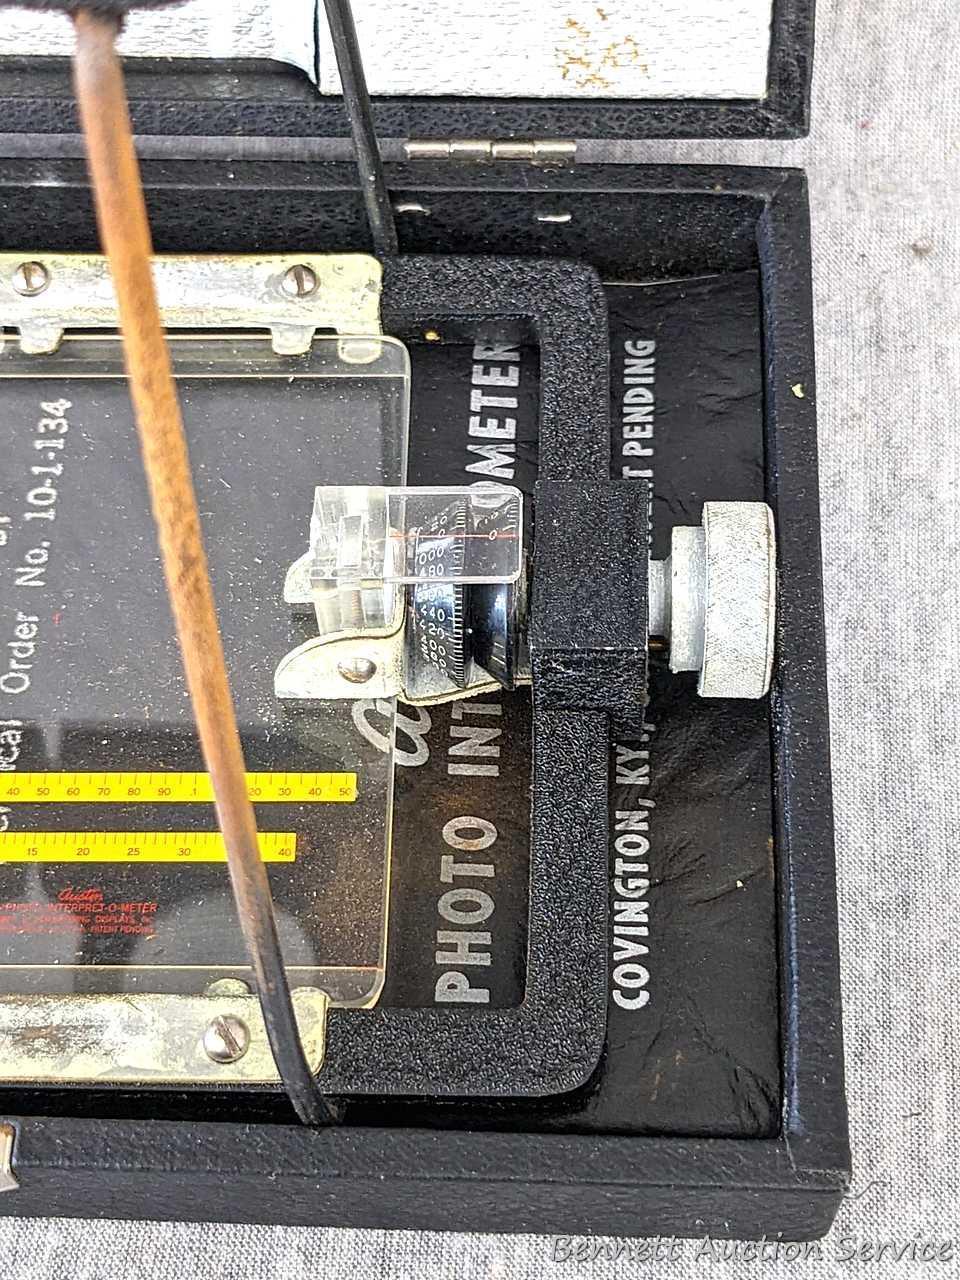 Vintage Austin Photo Interpret-O-Meter with original box, manual, and screwdriver. Mfg. by